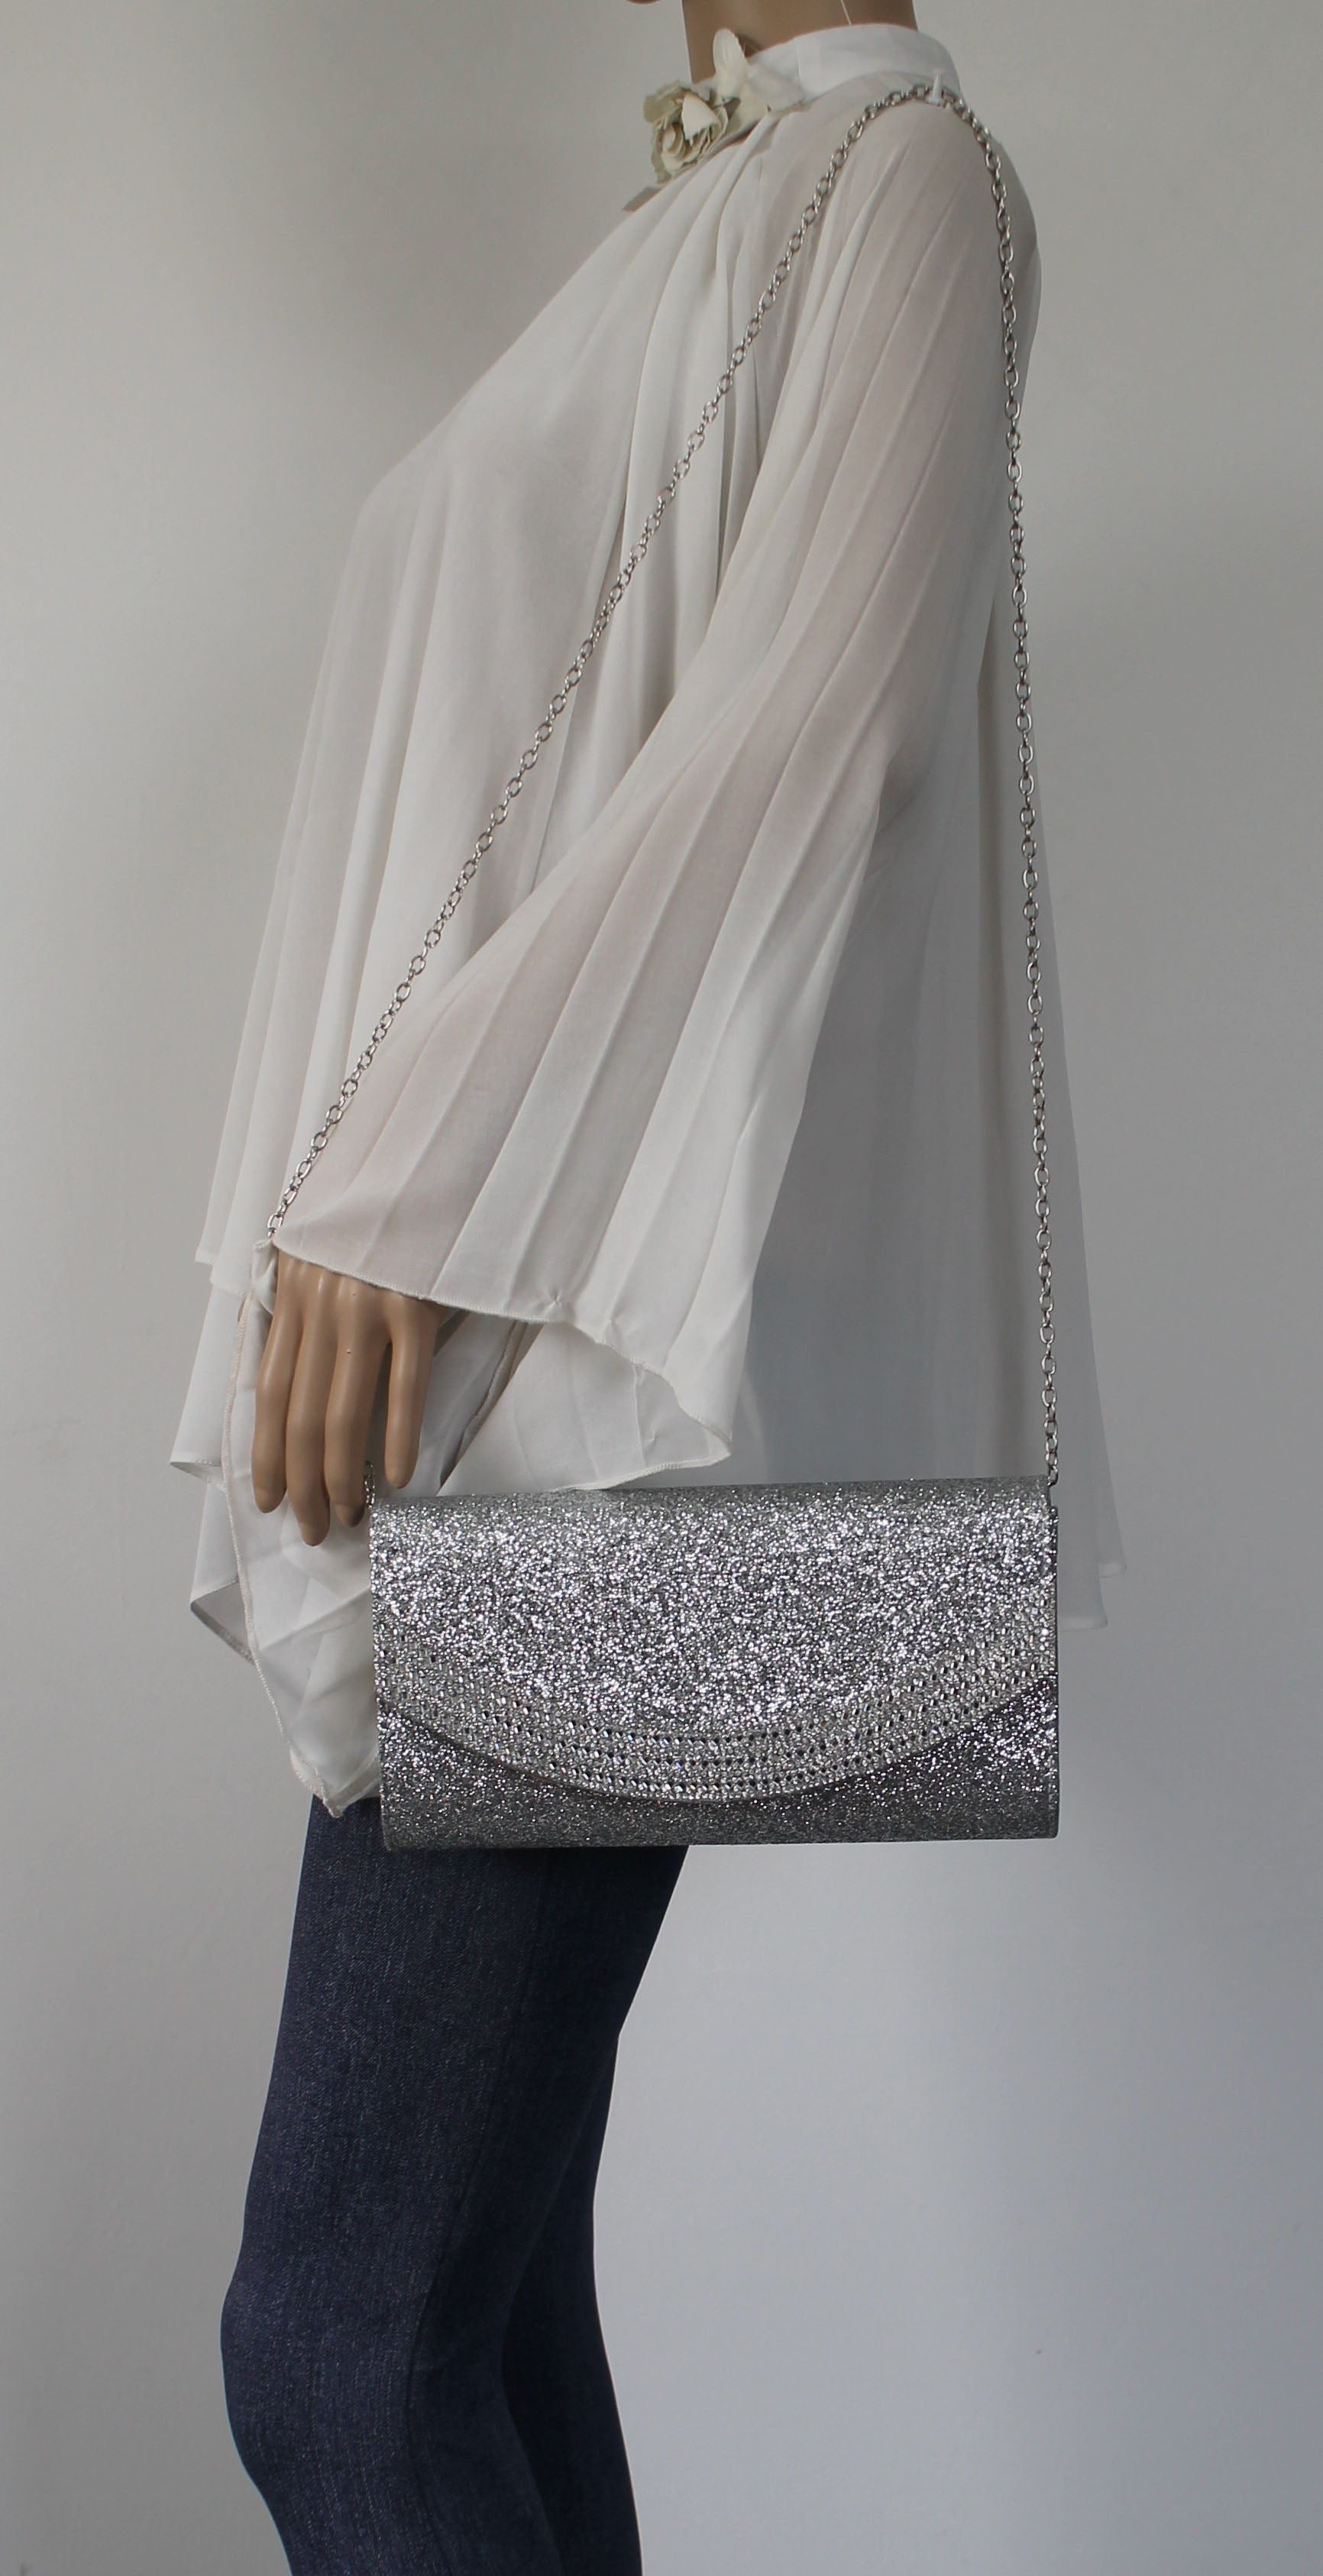 SWANKYSWANS Dakota Clutch Bag Silver Cute Cheap Clutch Bag For Weddings School and Work